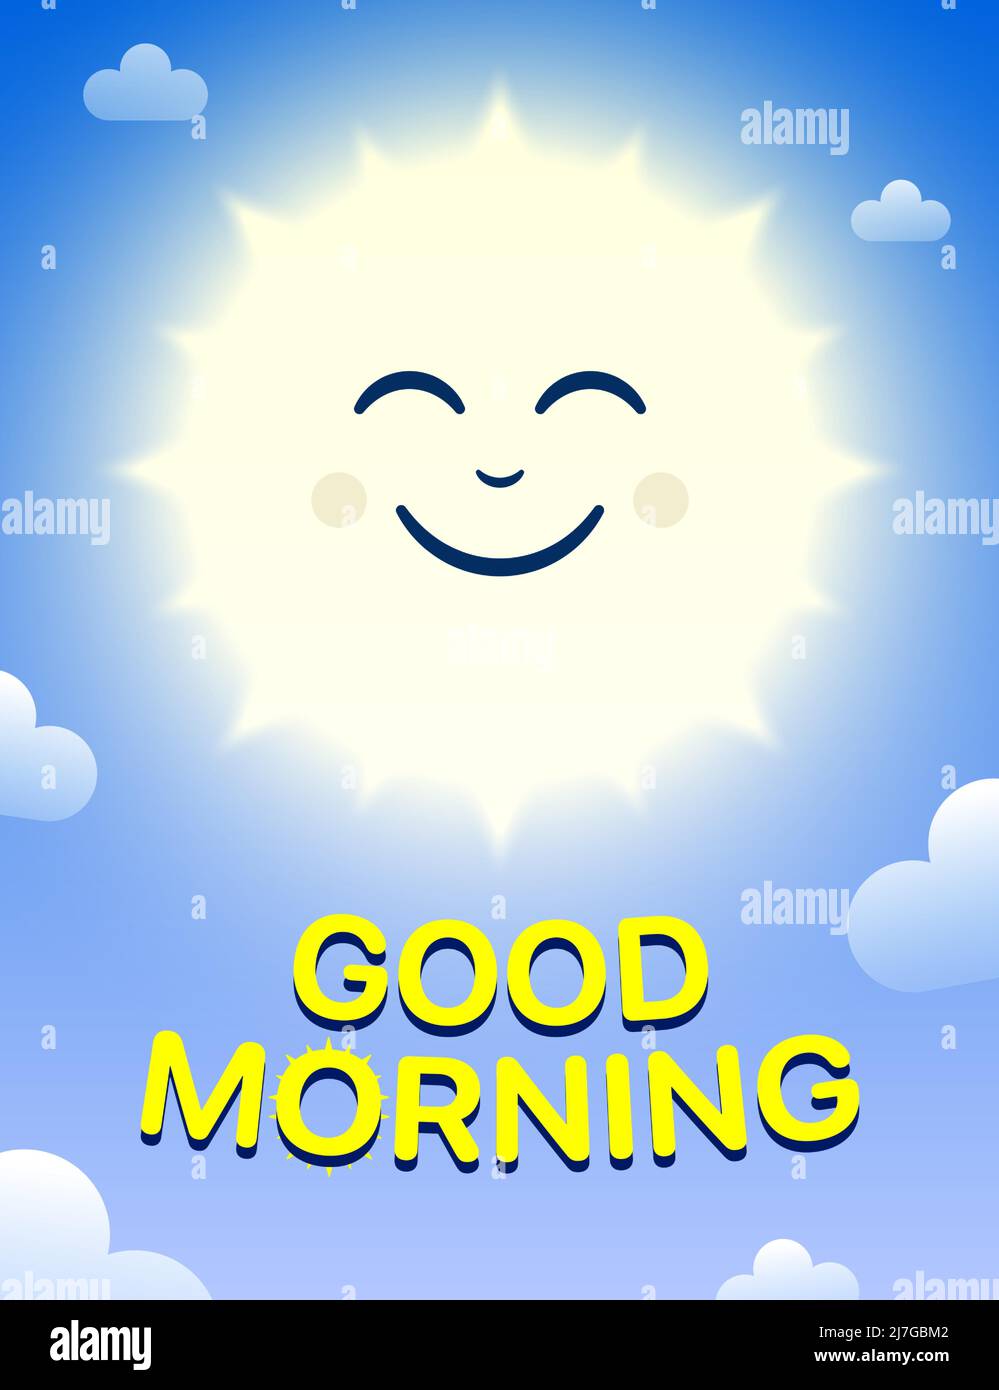 Good Morning cheerful vector design with a happy sun cartoon ...